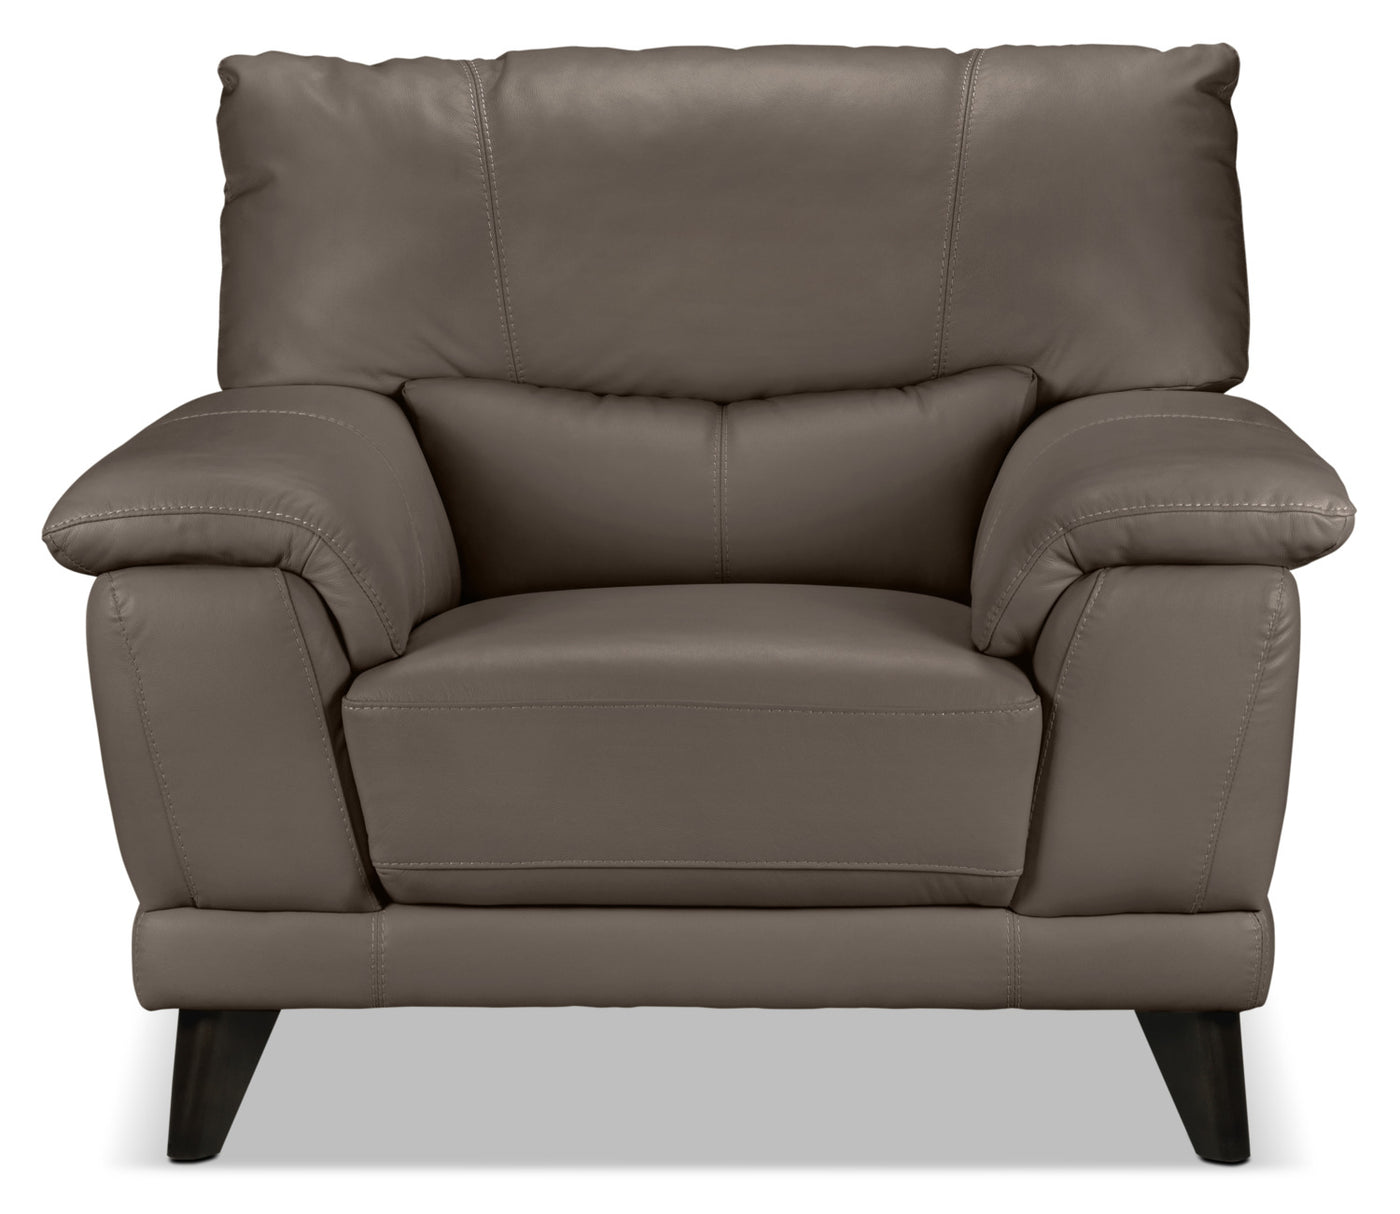 Braylon Leather Chair - African Grey